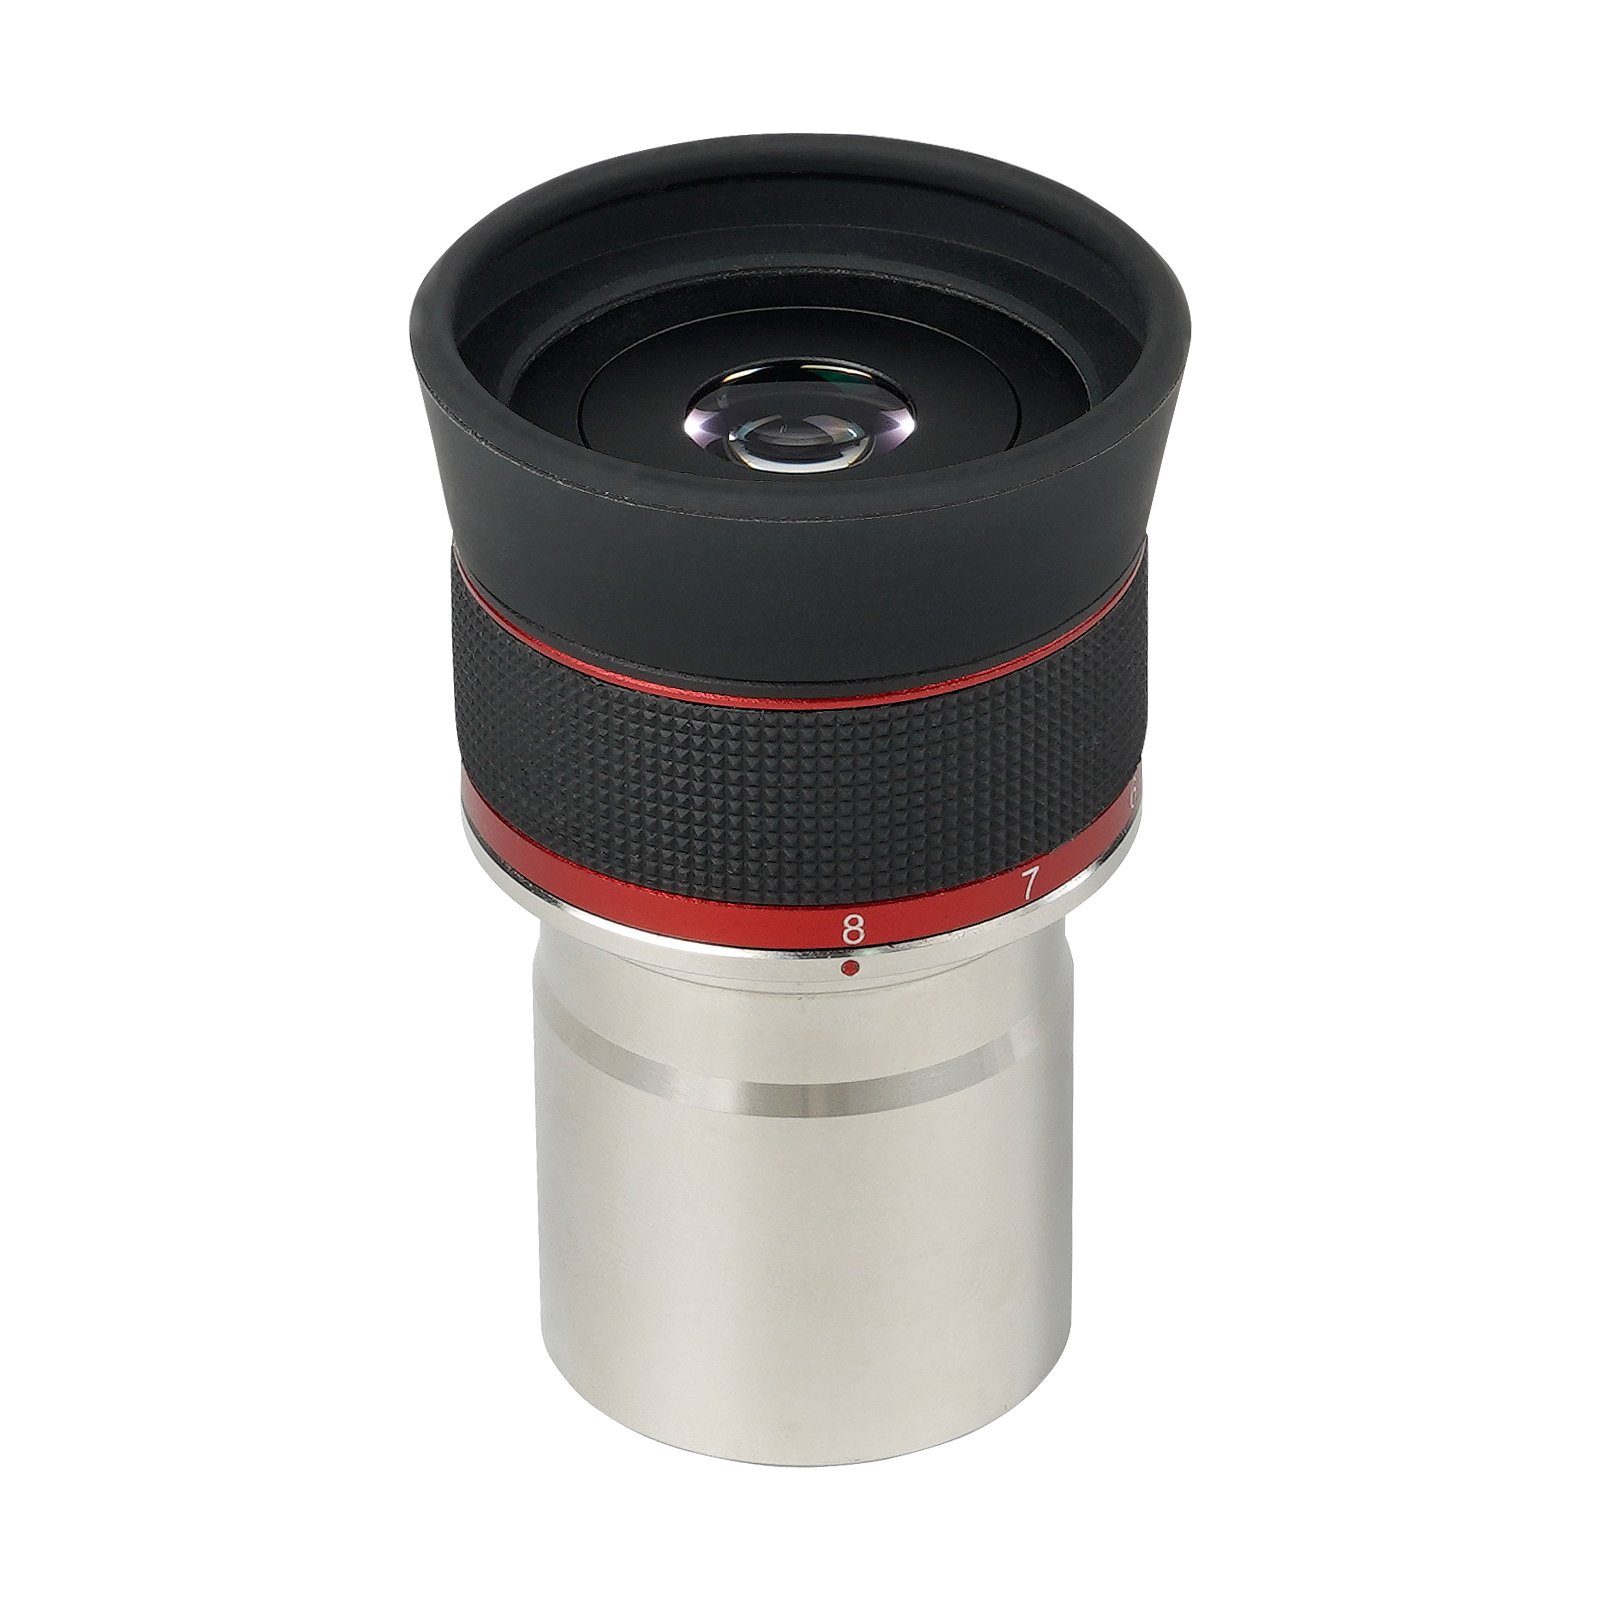 SVBONY SV215 Zoom-Okular, 3 mm bis 8 mm Okular mit parfokalem Design Opernglas